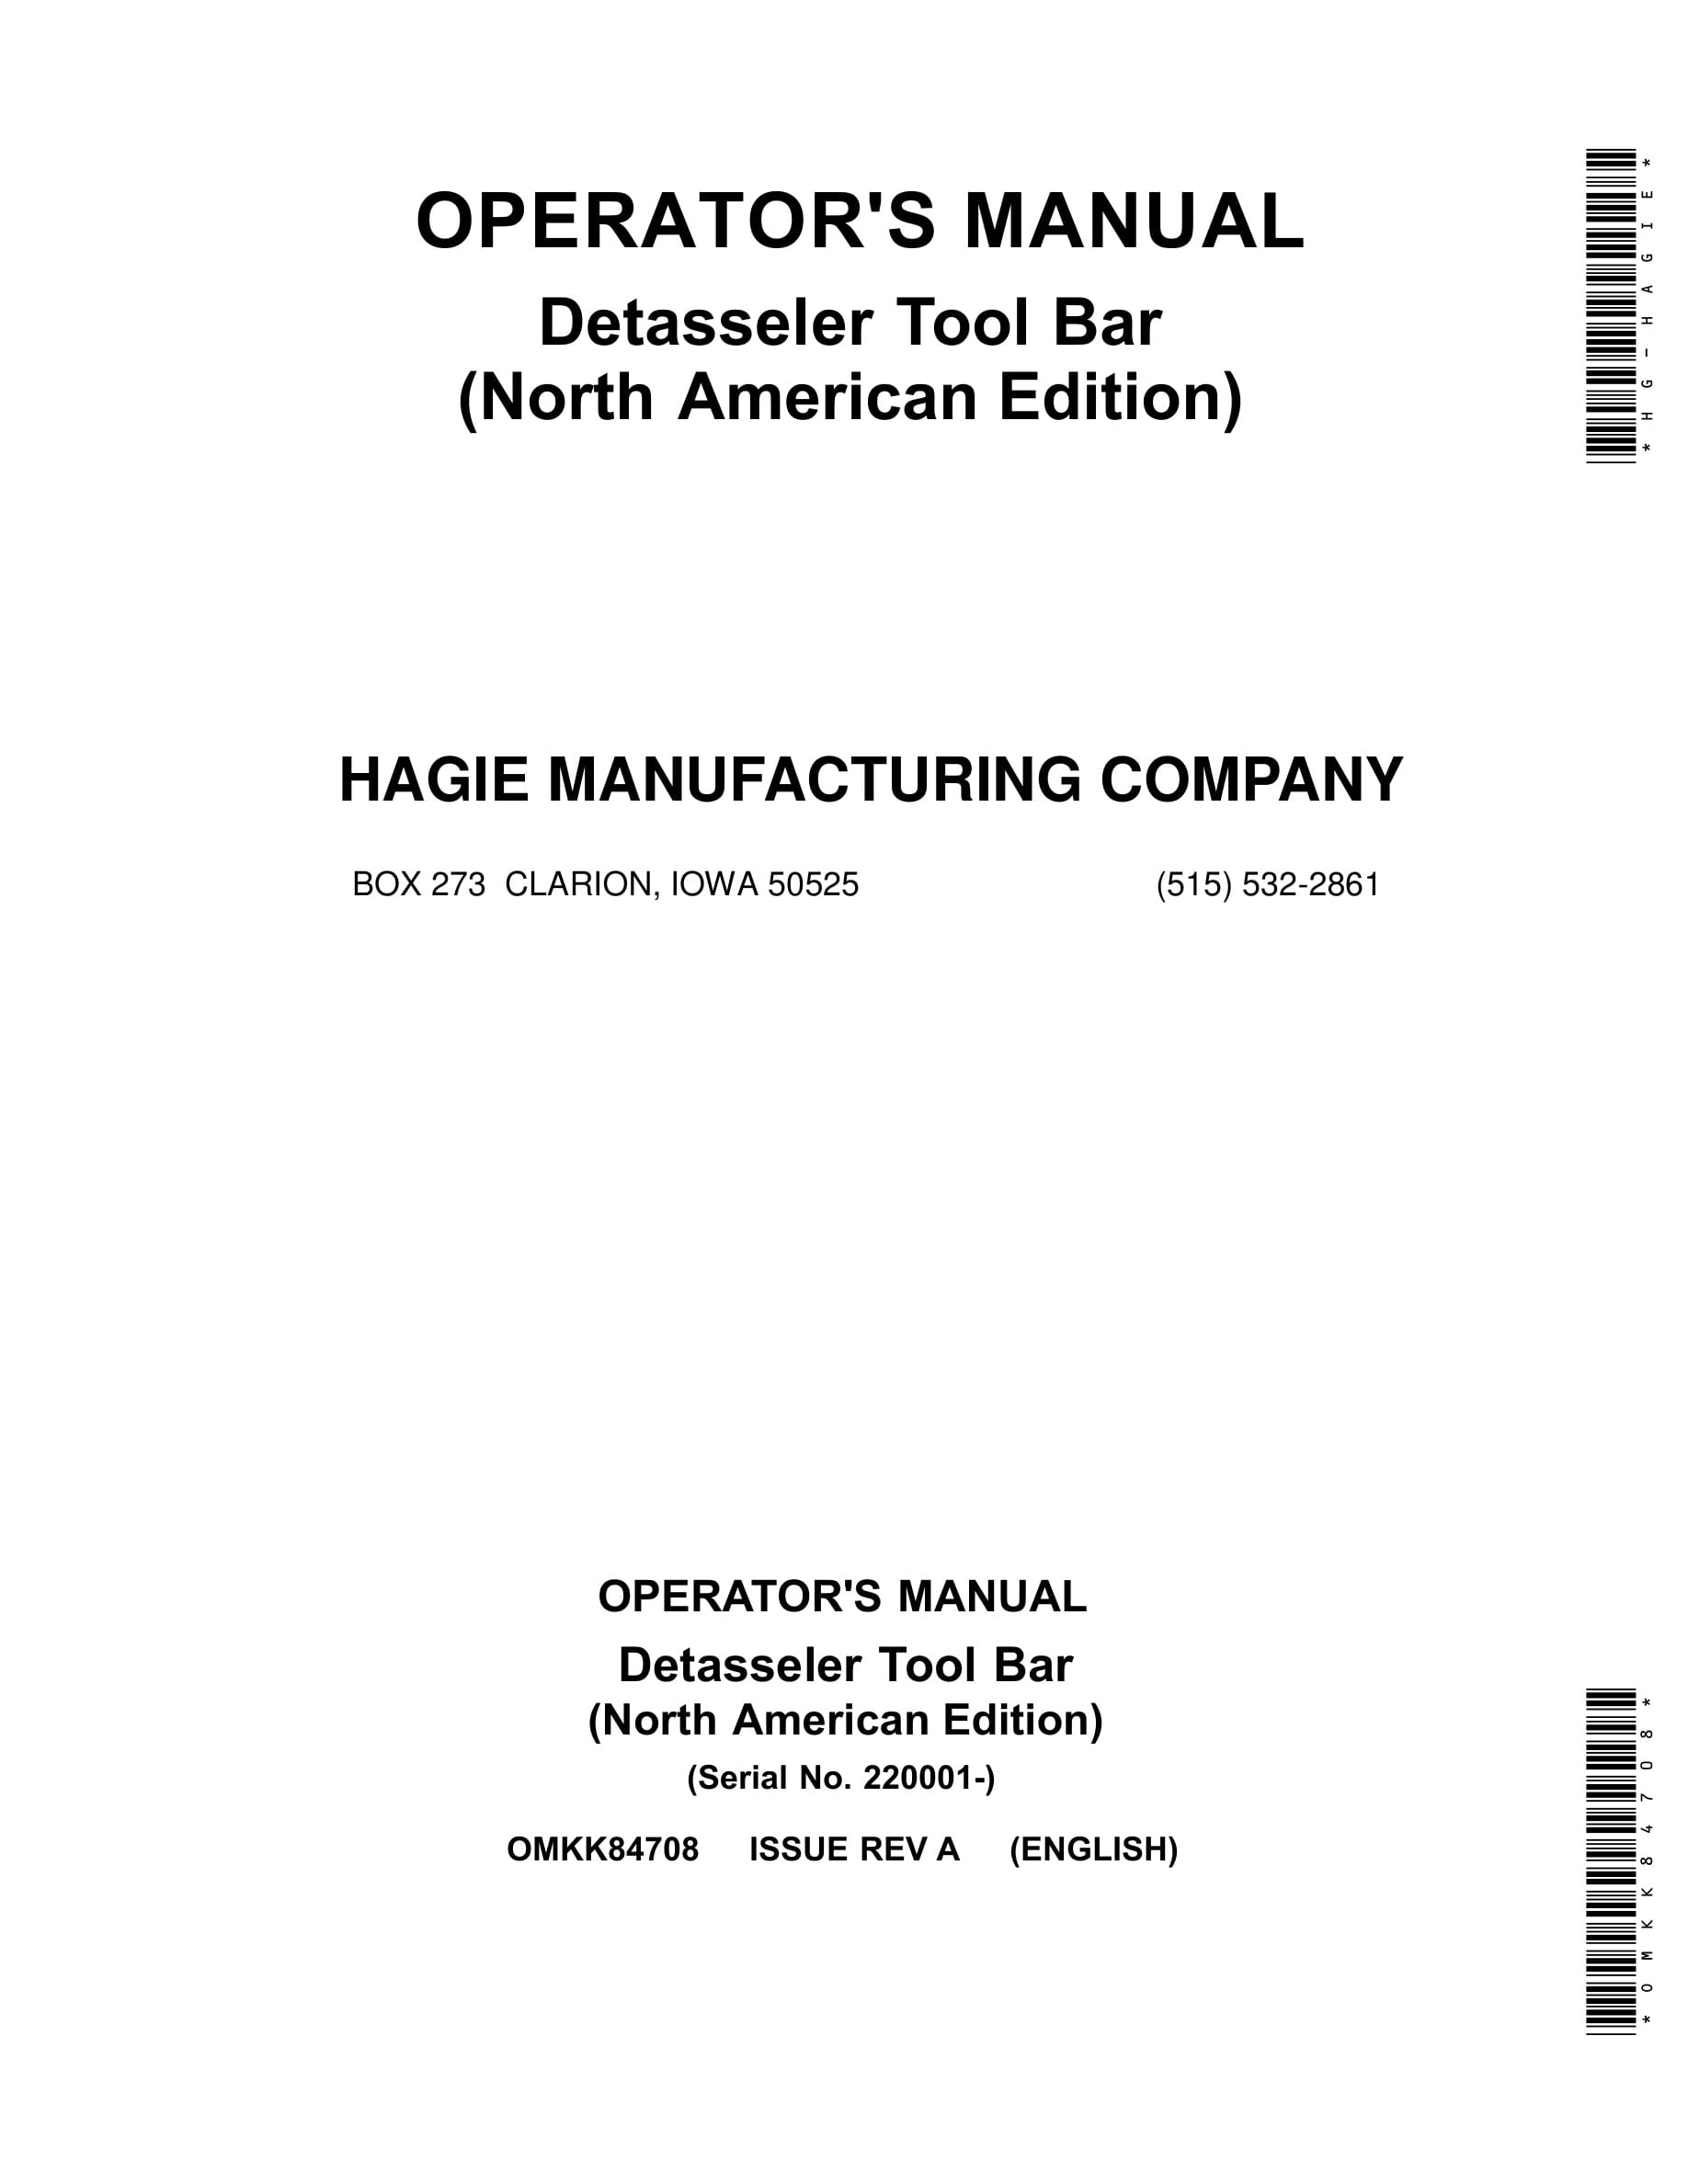 John Deere Detasseler Tool Bar Operator Manual OMKK84708-1